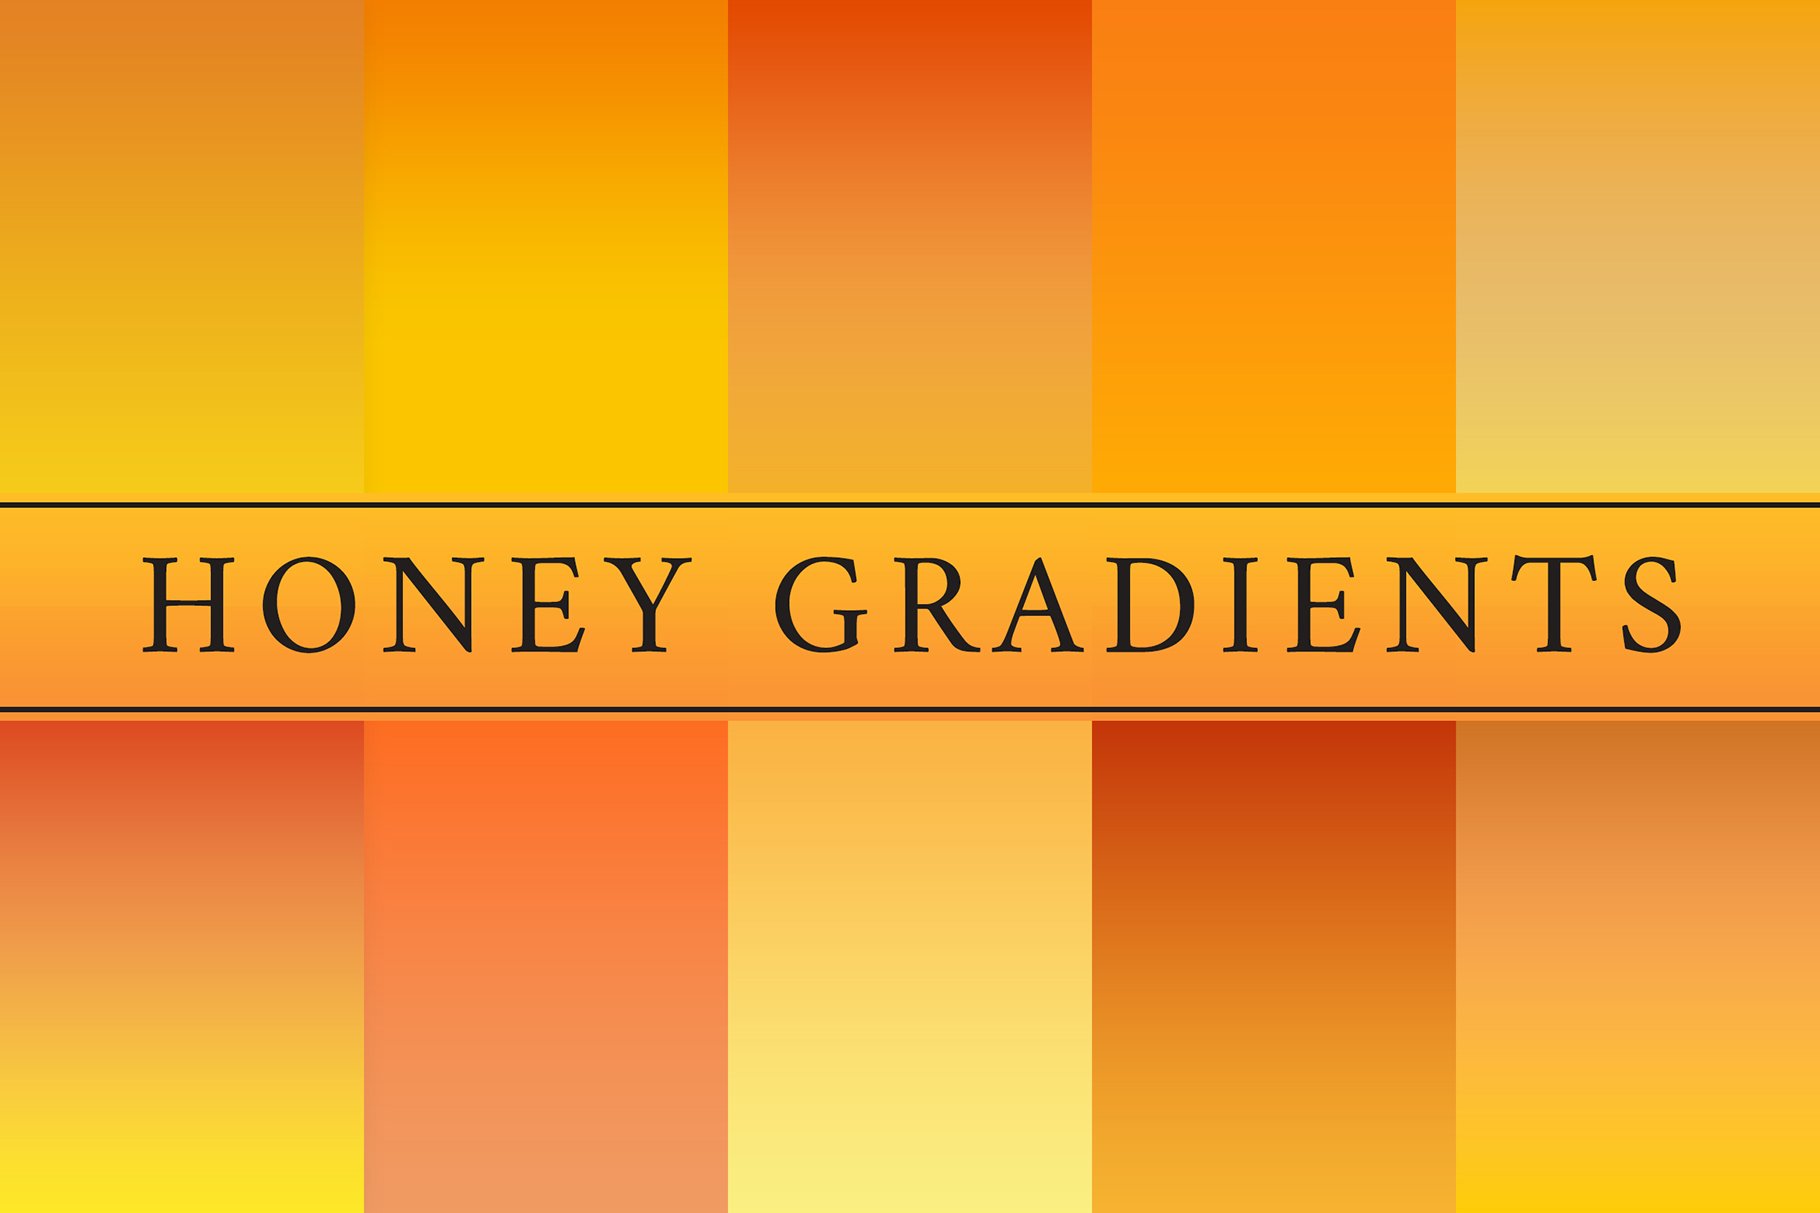 Honey Gradients cover image.